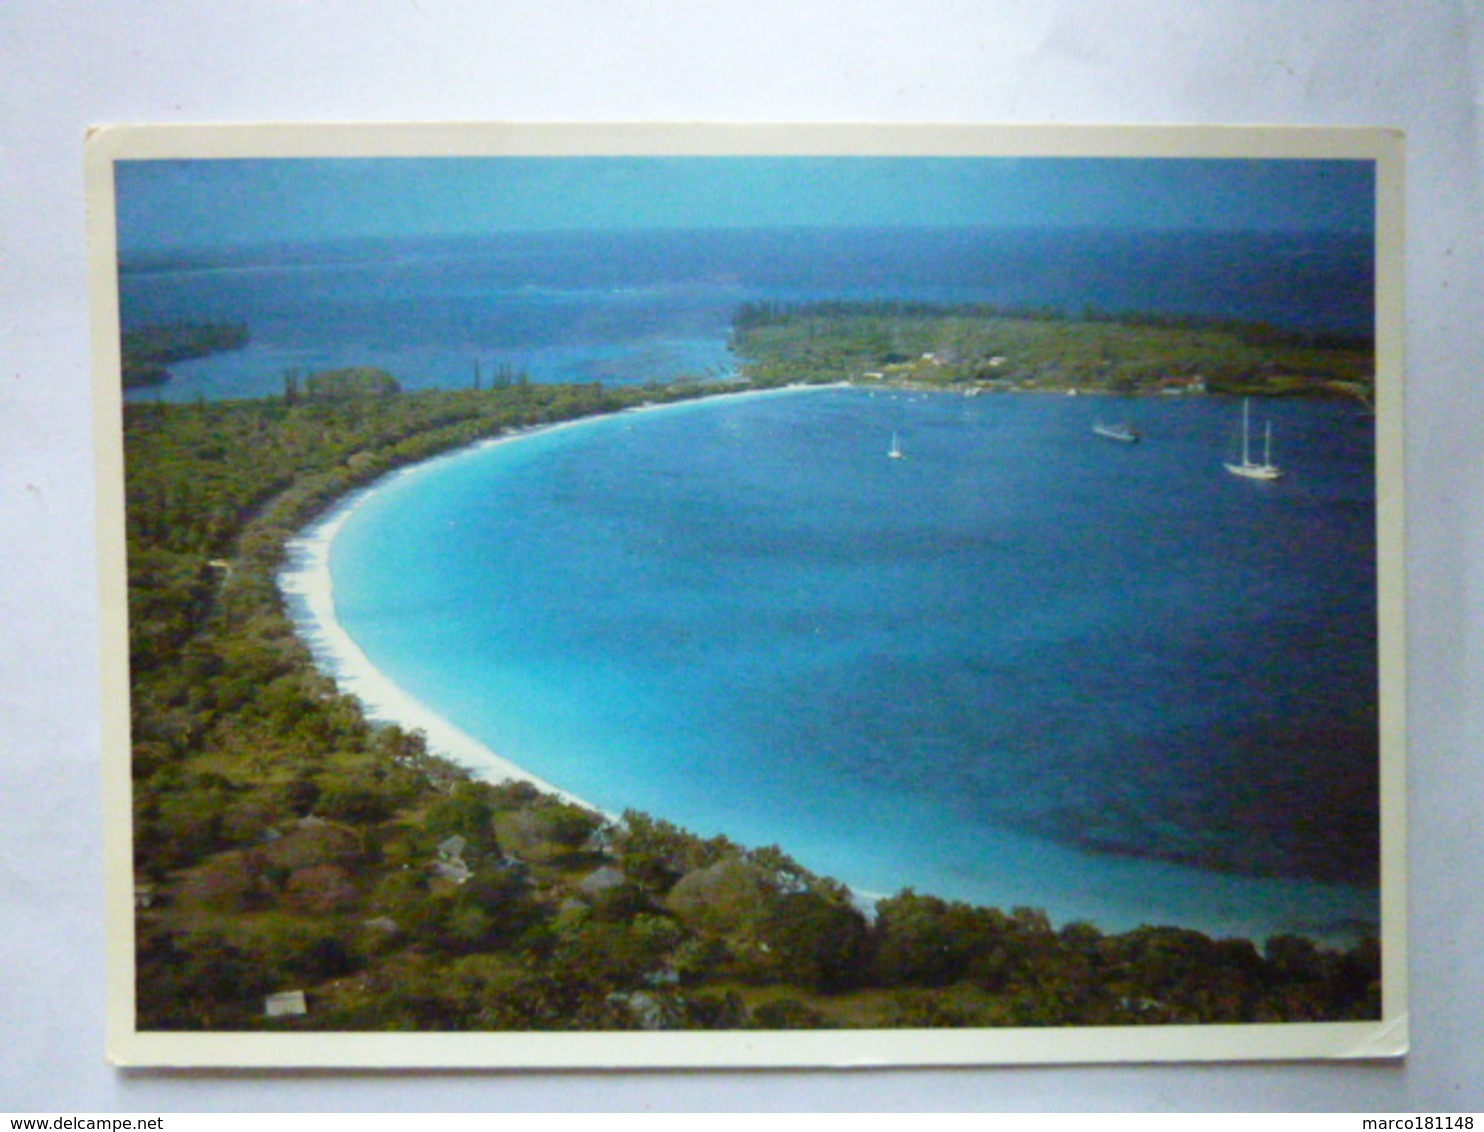 KUTO BAY, Island Of Pines - Baie De KUTO à L'Ile Des Pins - New Caledonia